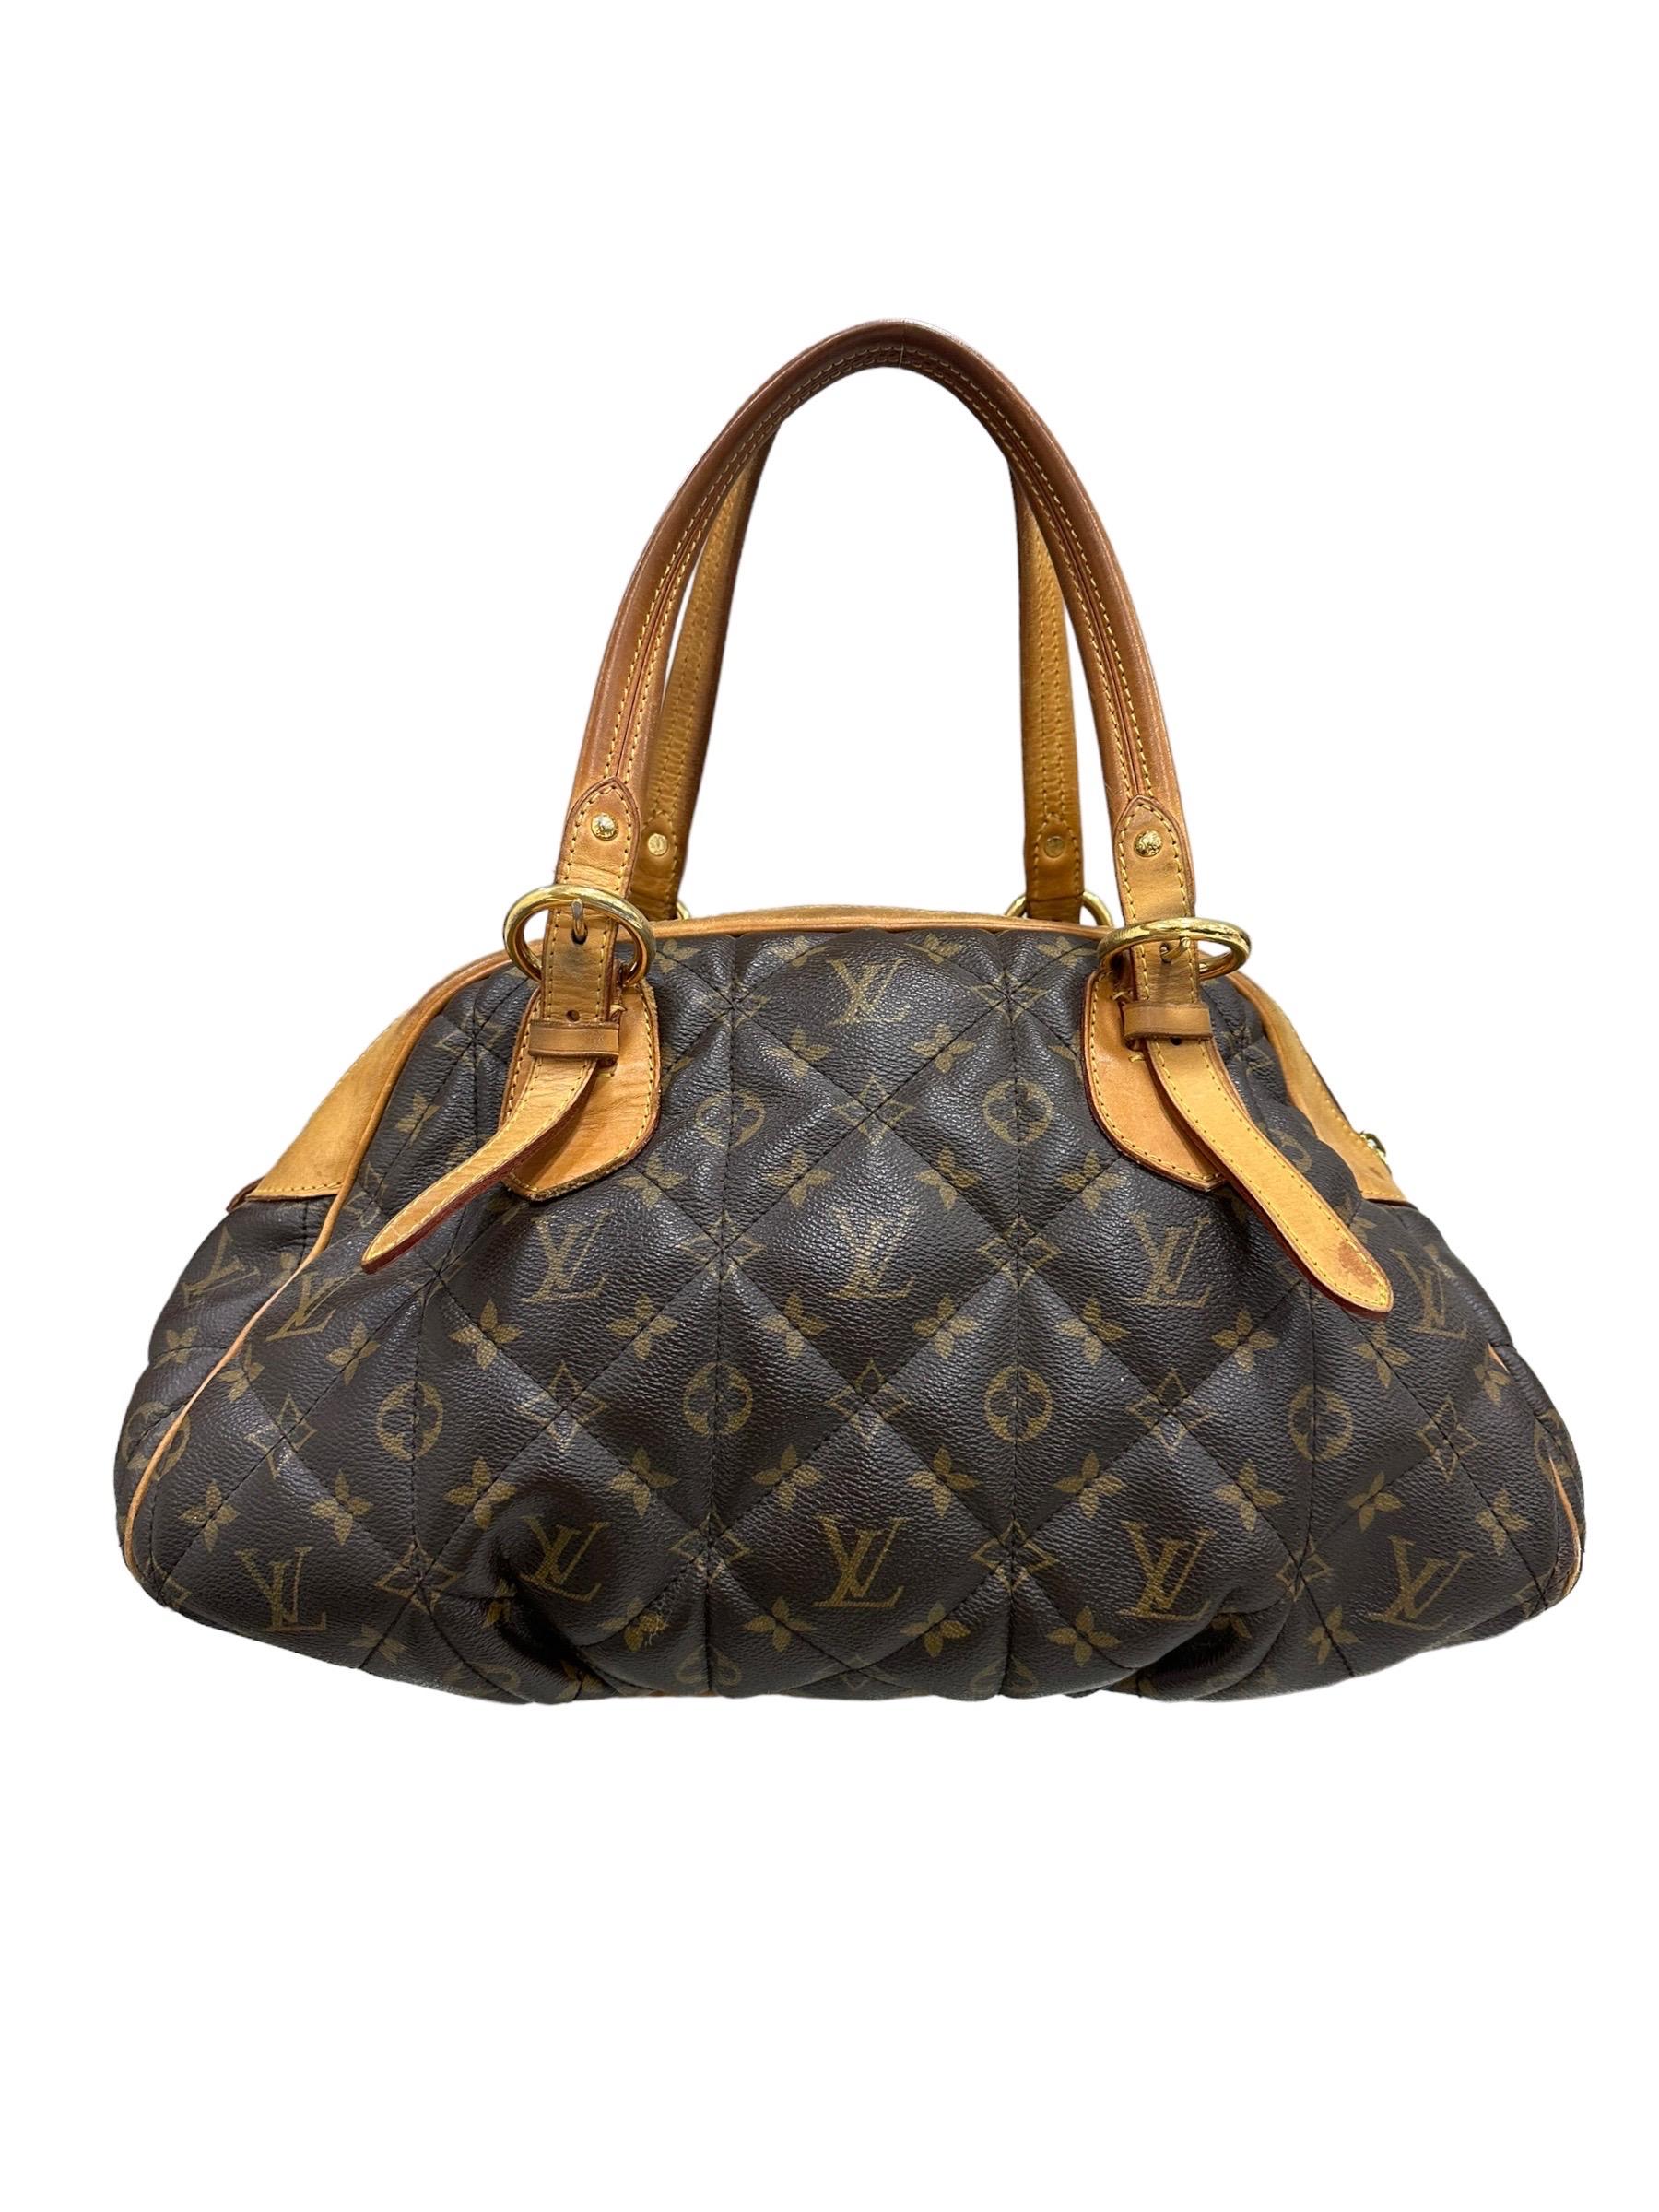 Women's Louis Vuitton Etoile Bowling Monogram Top Handle Bag